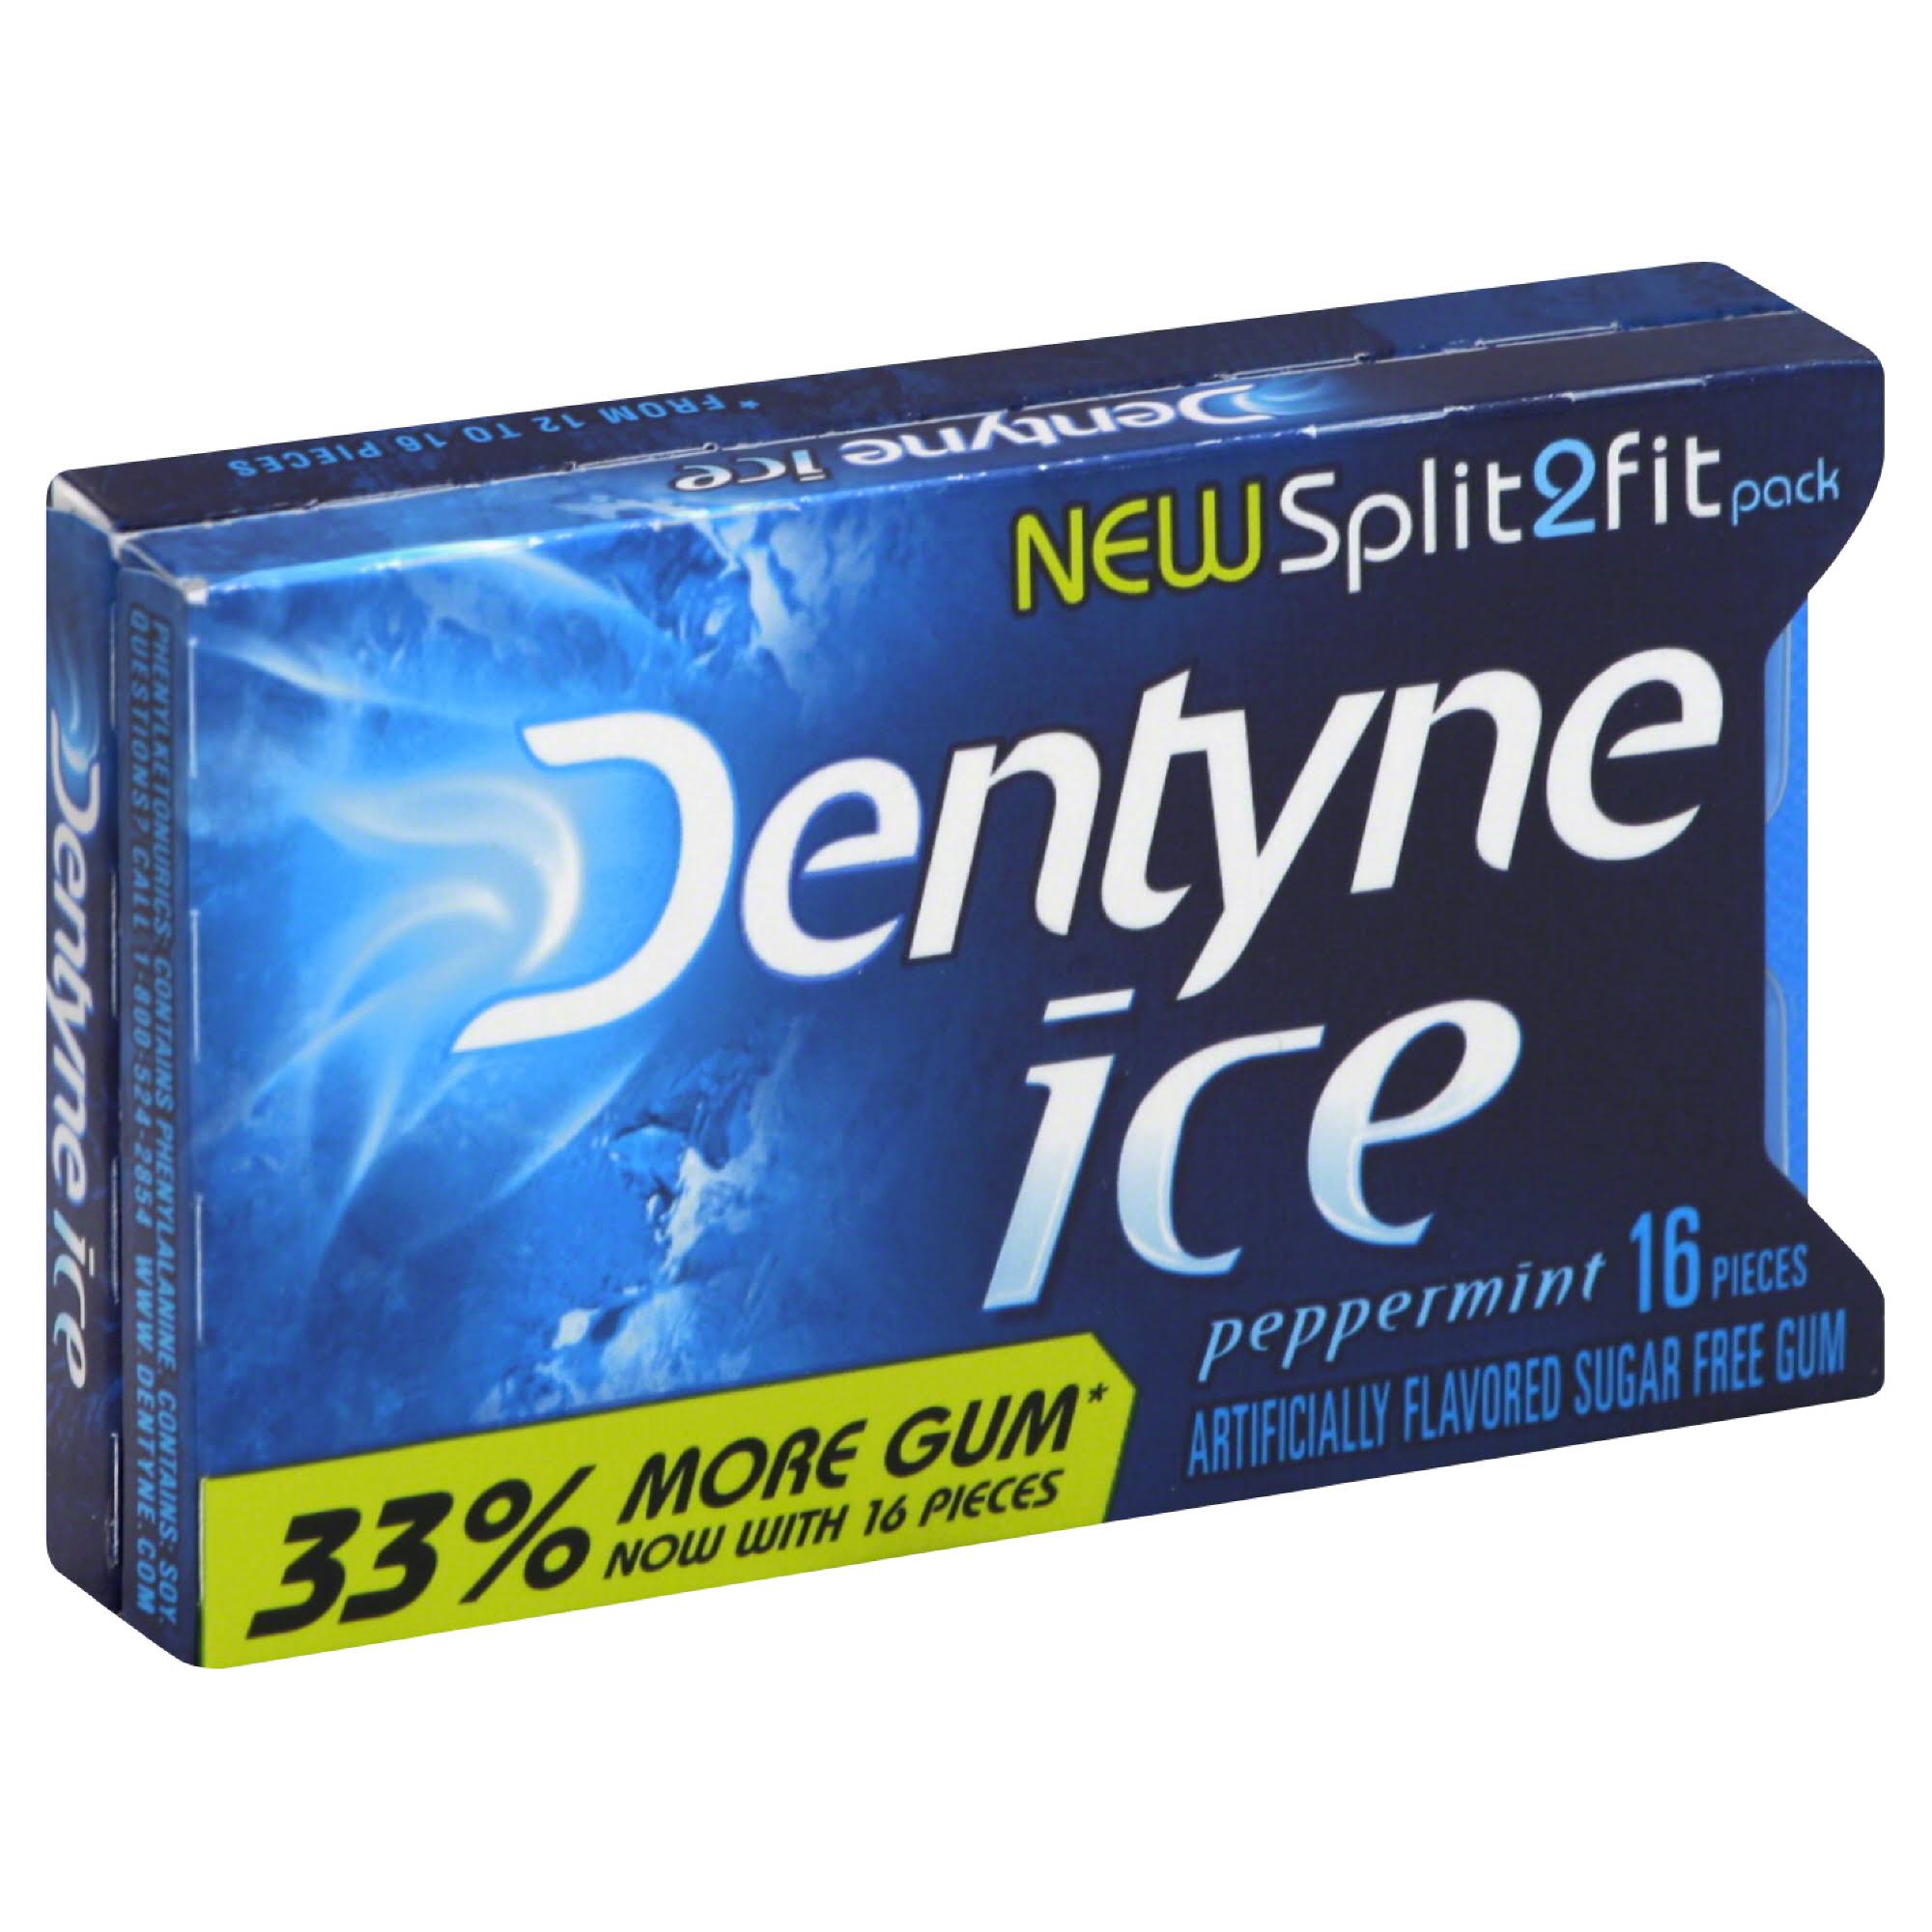 Dentyne Ice Sugar Free Peppermint Gum - 16ct